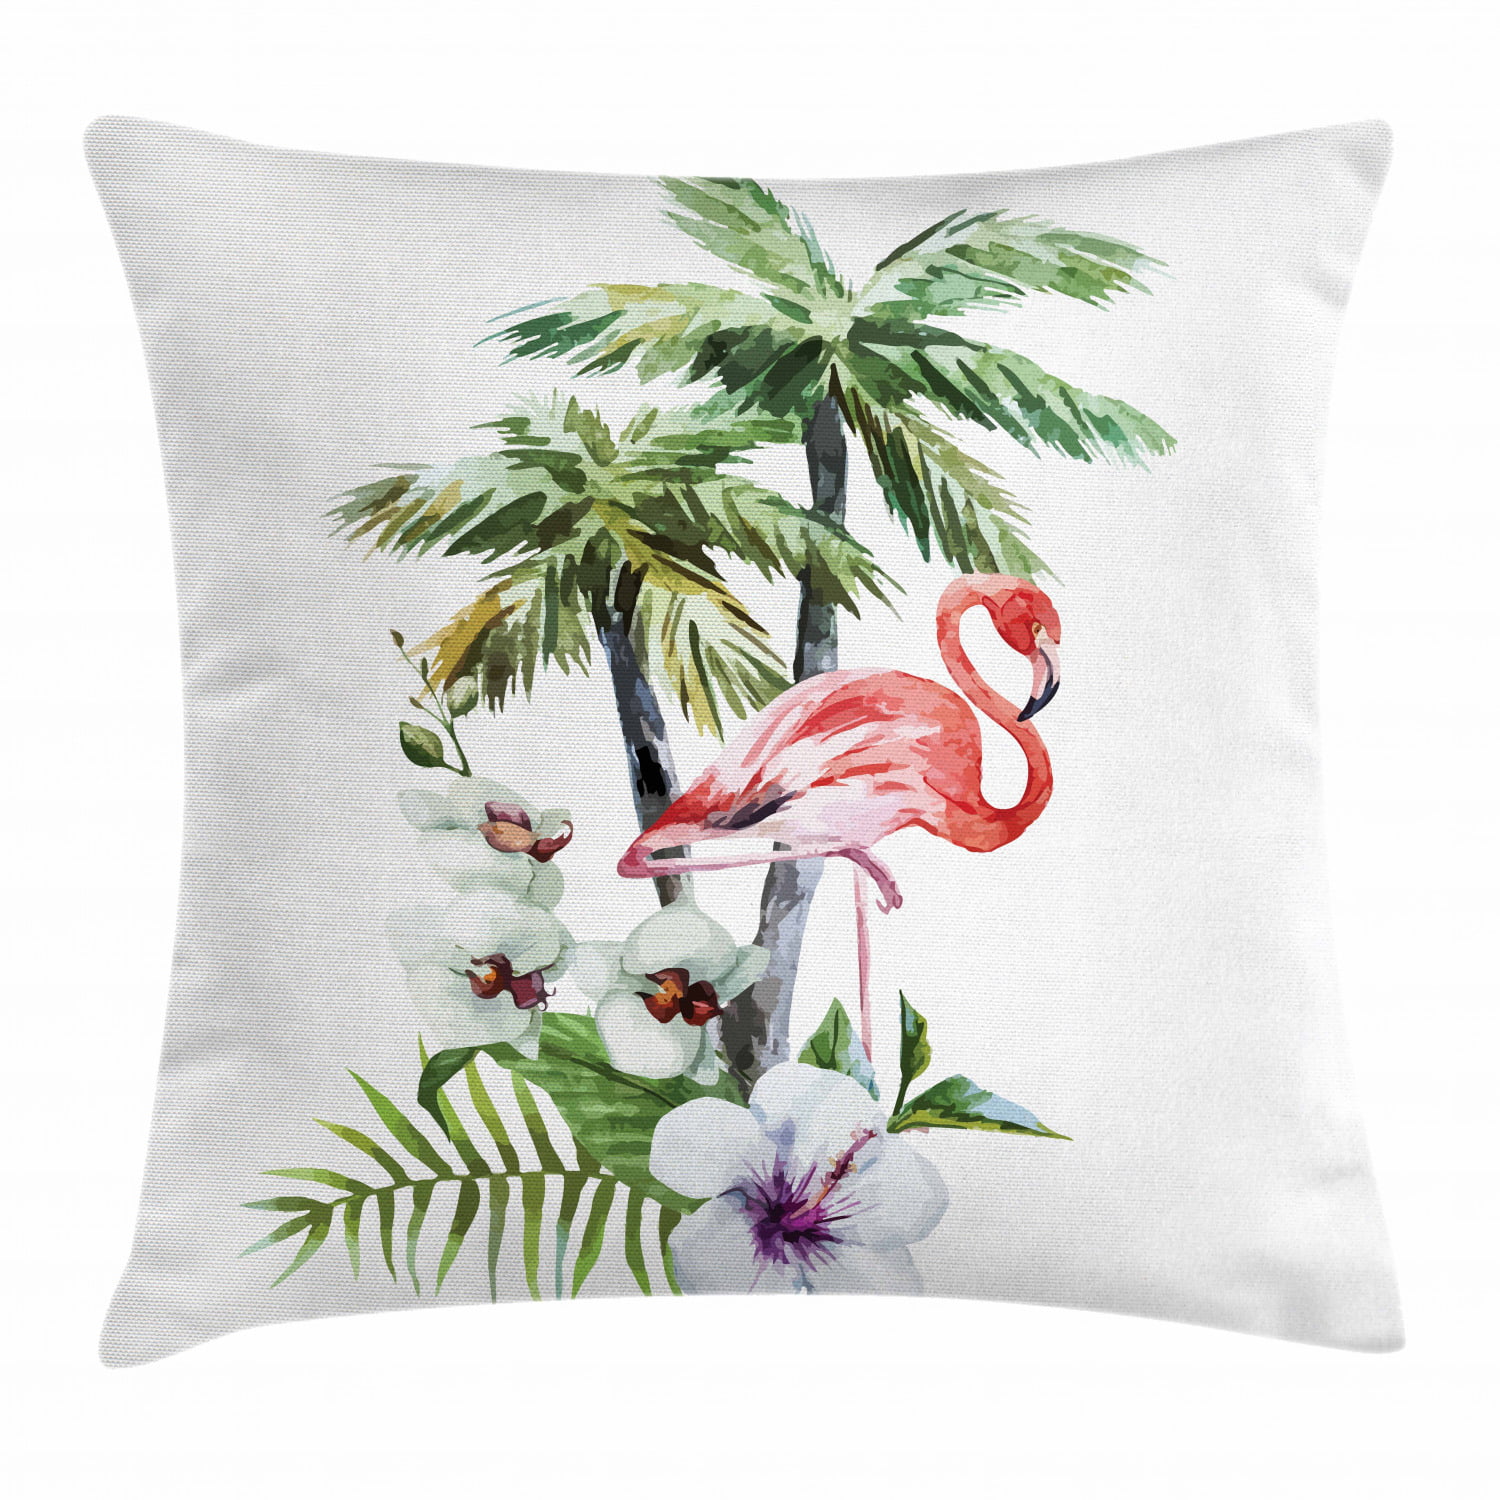 New Year Flamingos Lemon Tropical Decorative Cushion Cover  Throw Pillow Case 